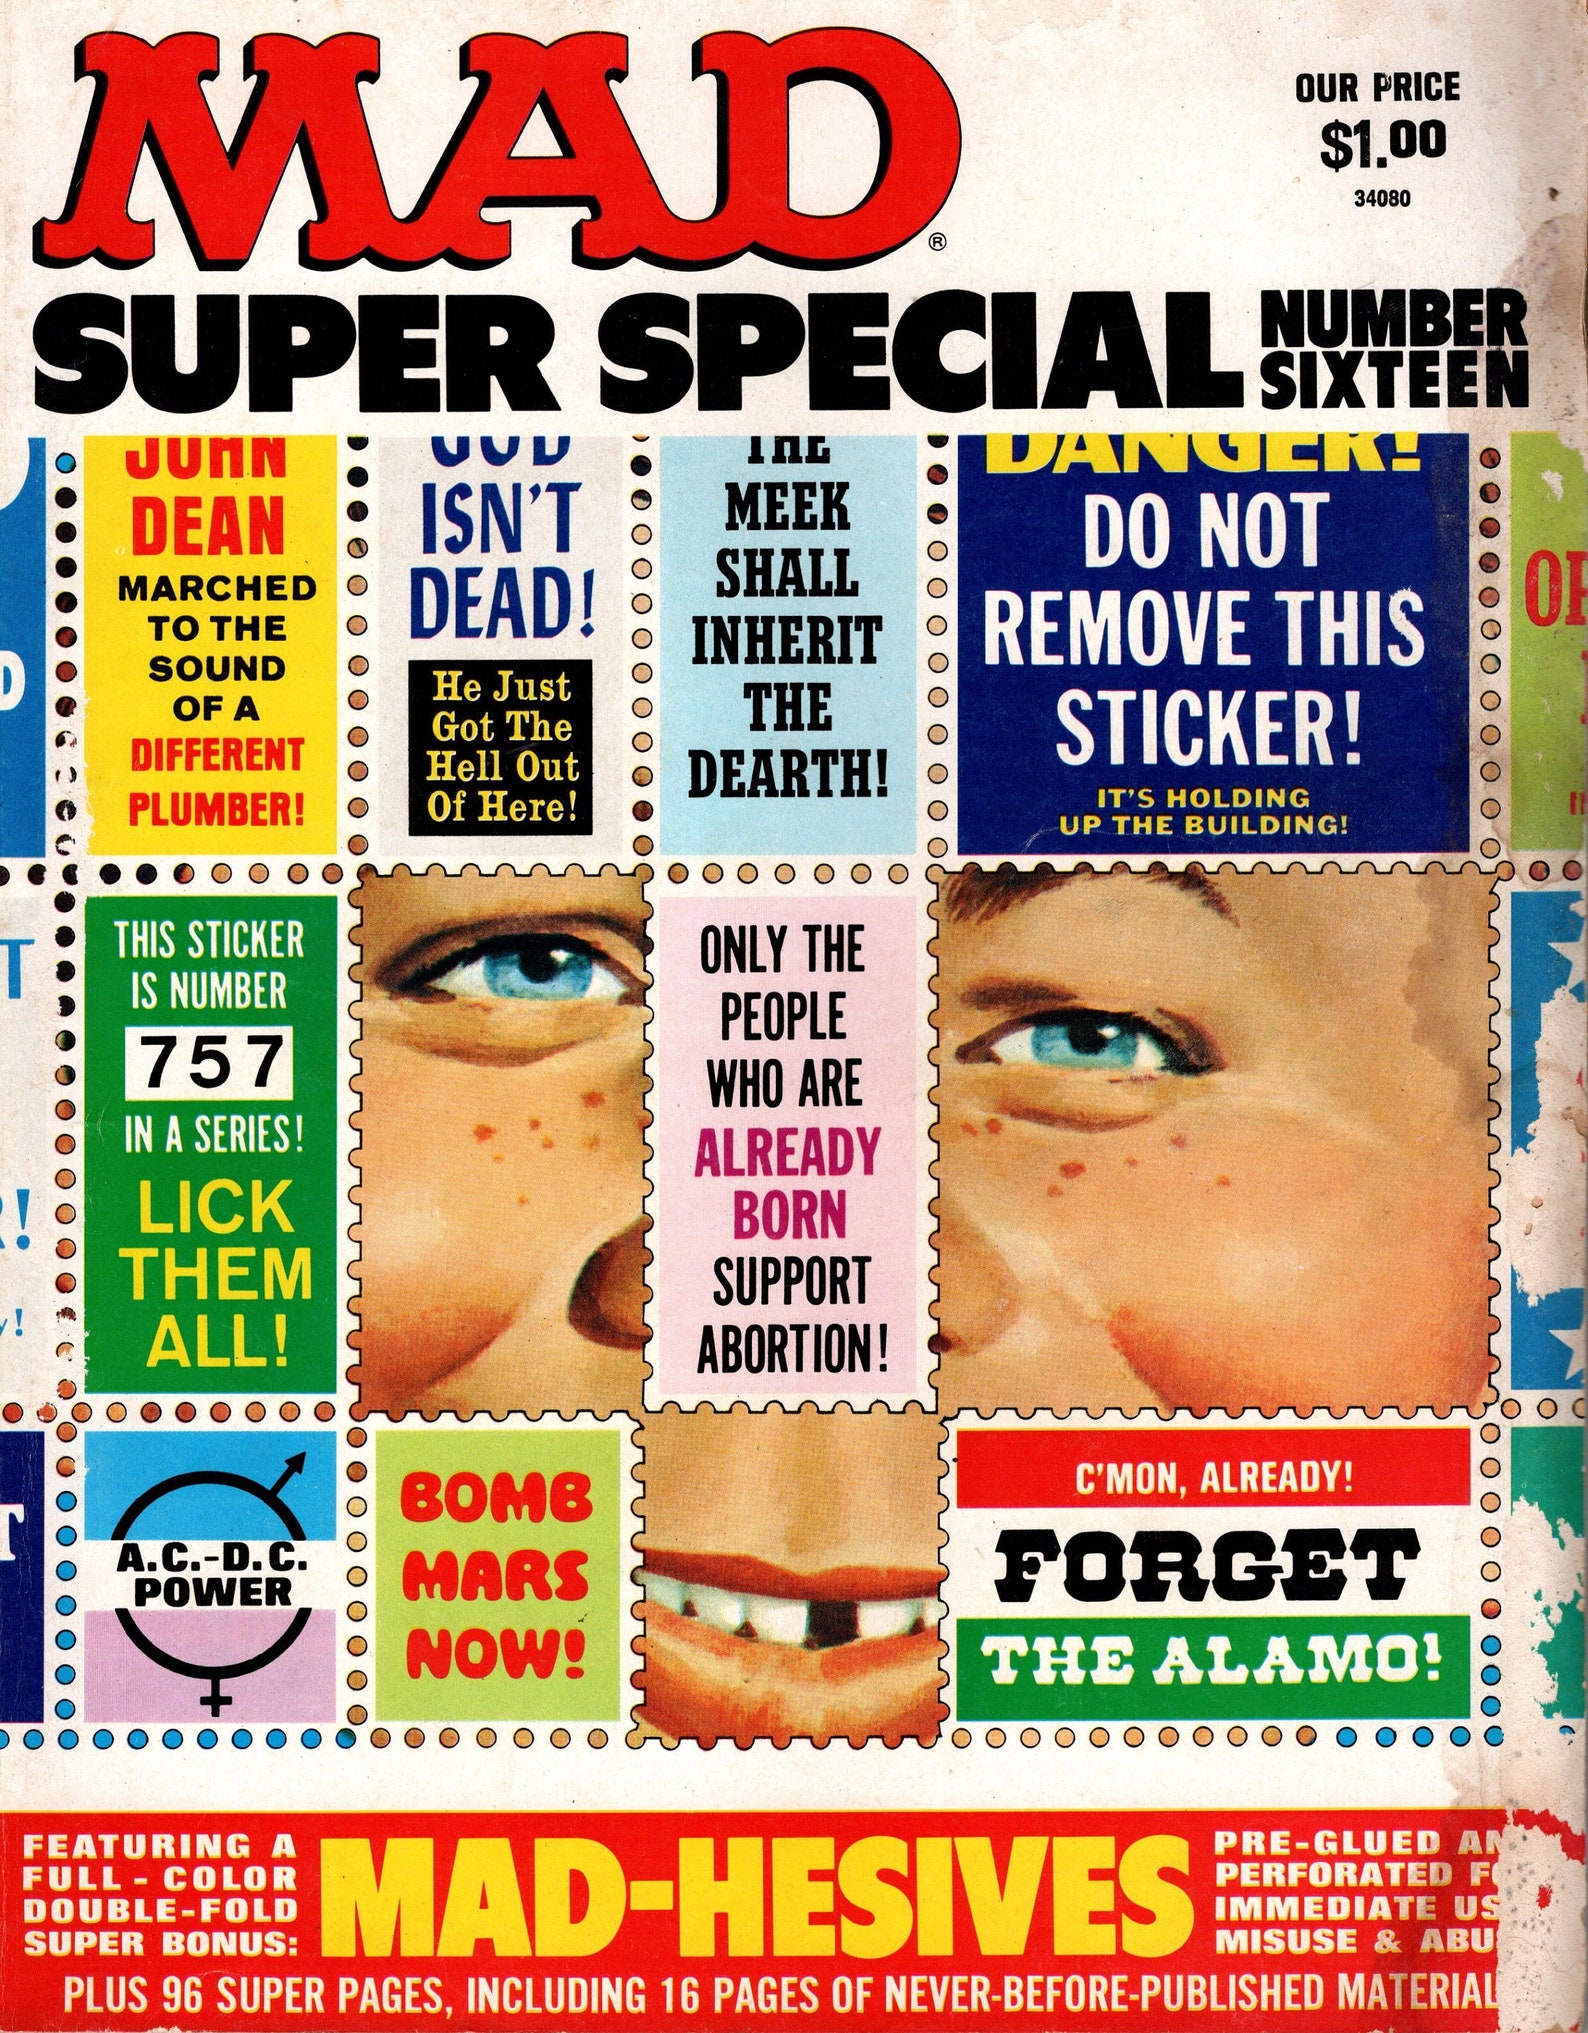 Super magazine. Special Magazine журнал. Mad Special. Special Magazine. Super Special стоки.